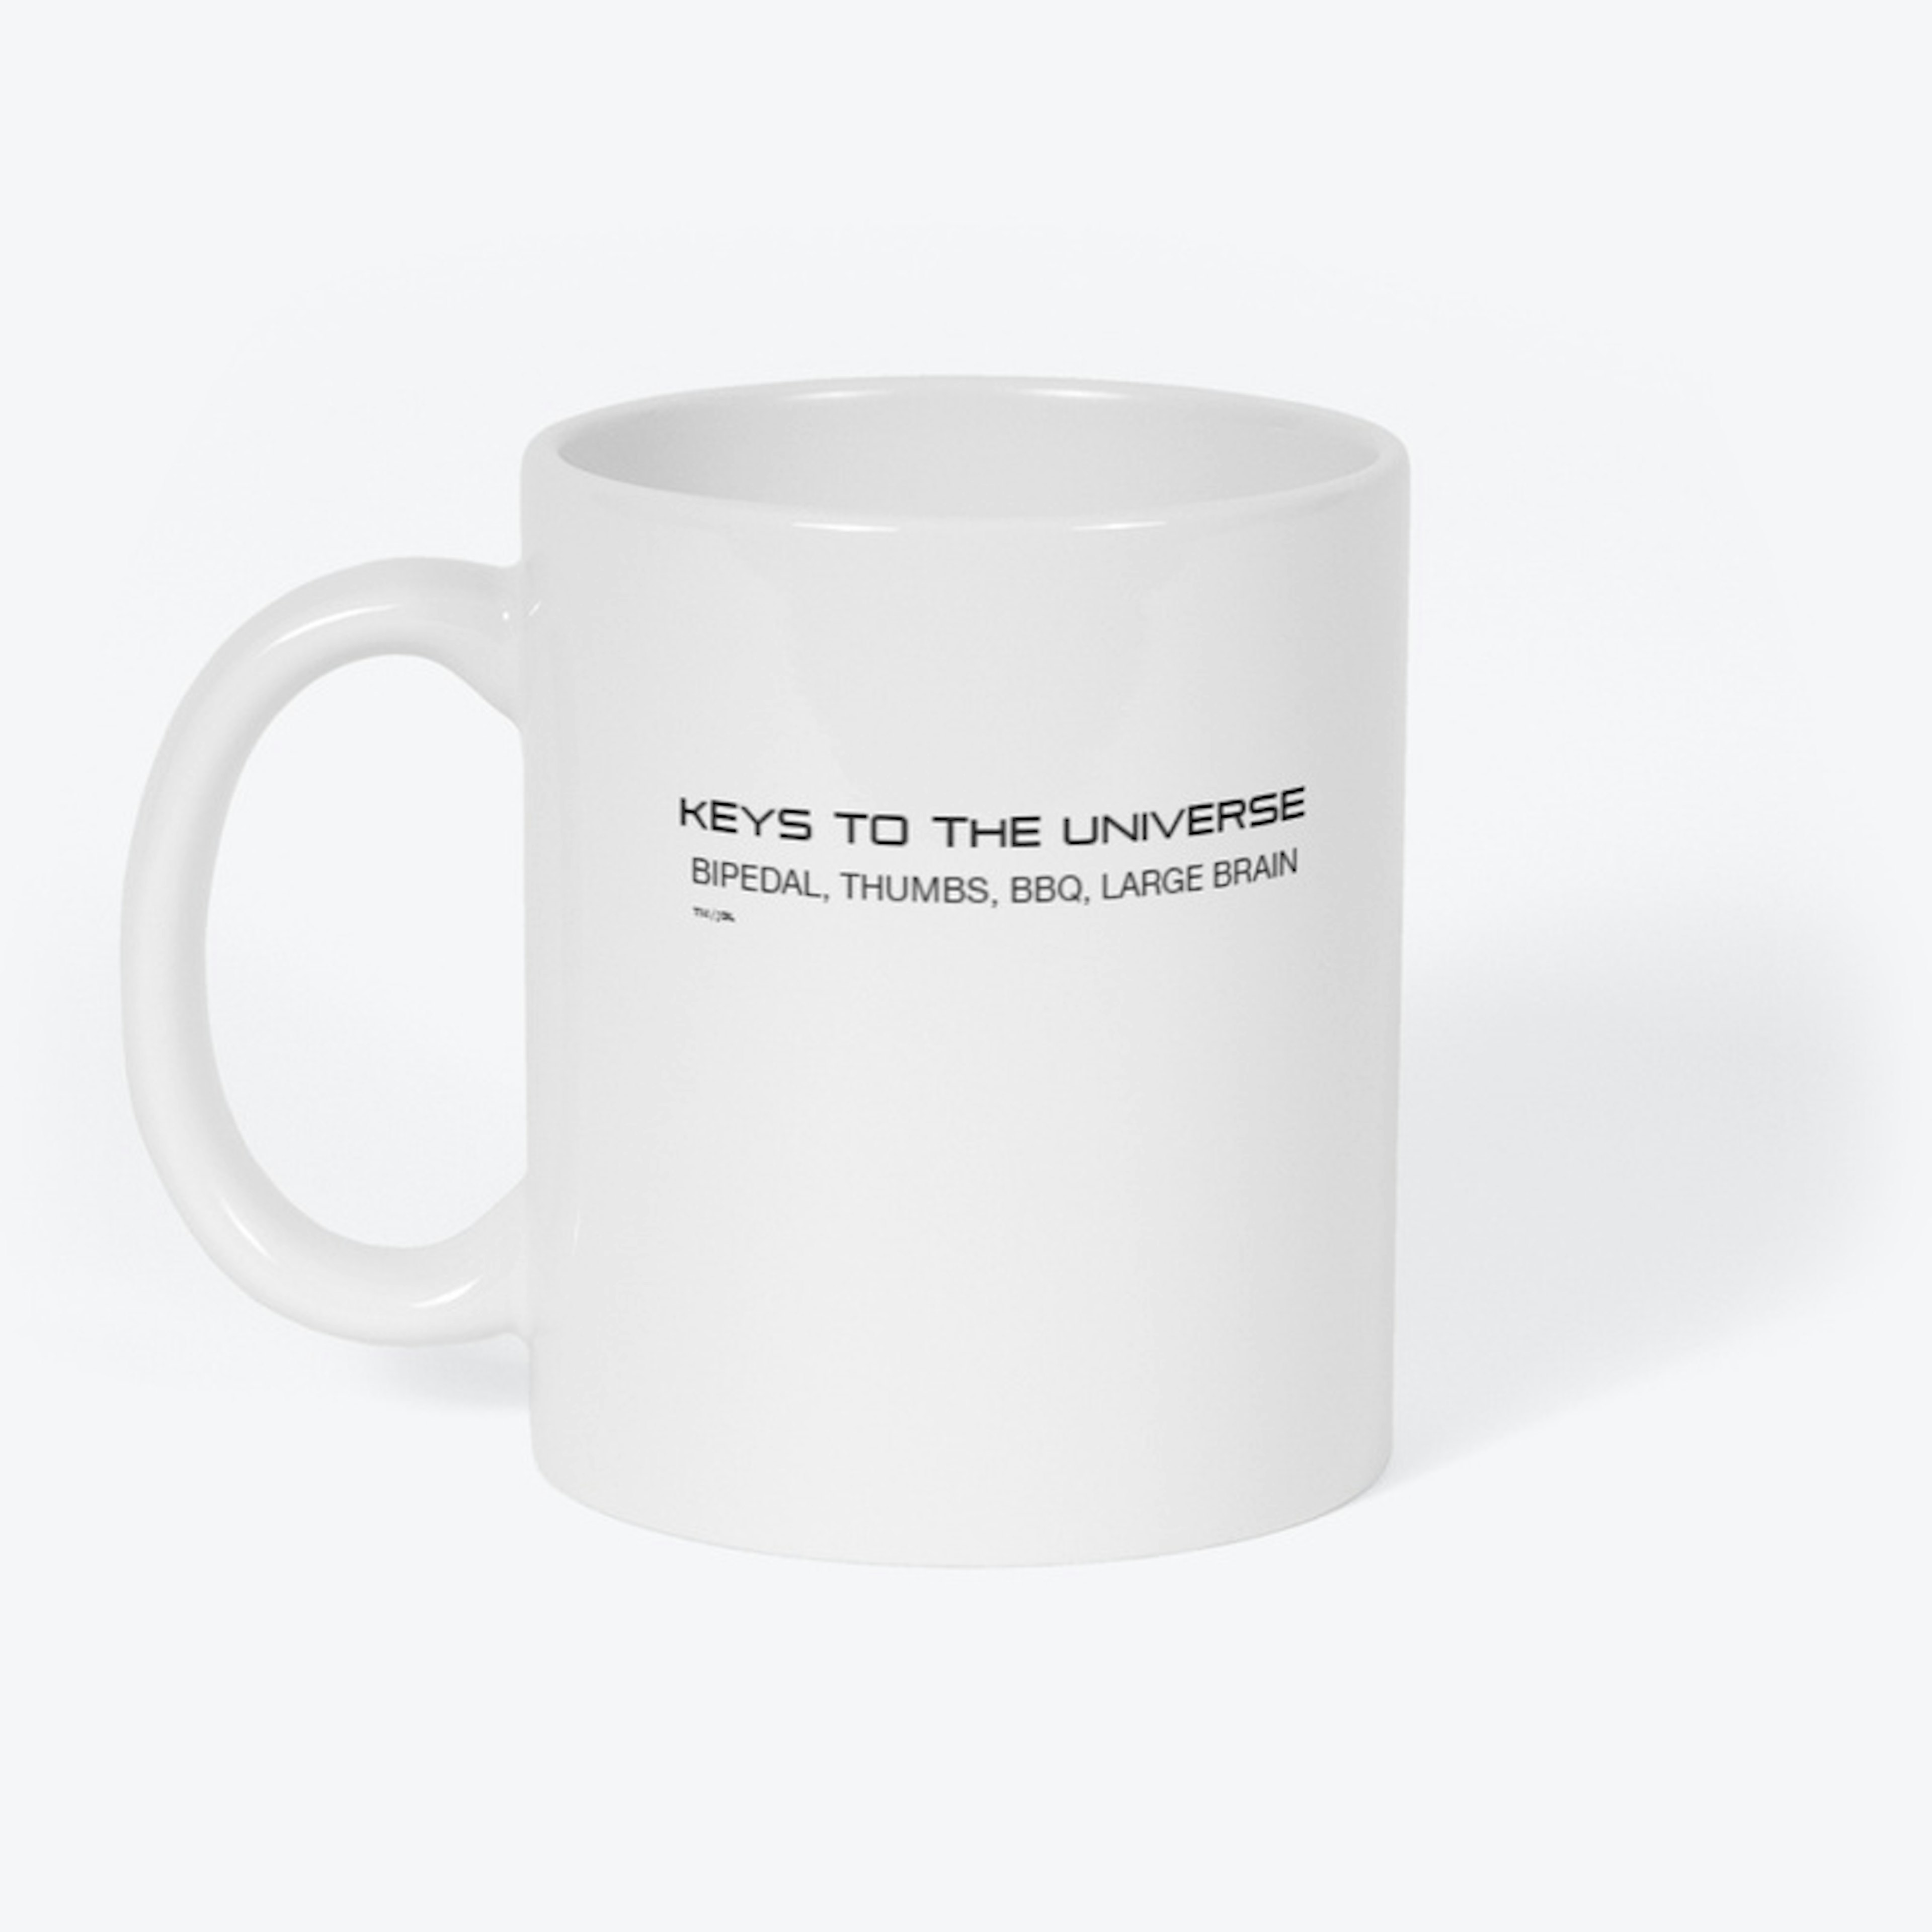 Keys To the Universe mug